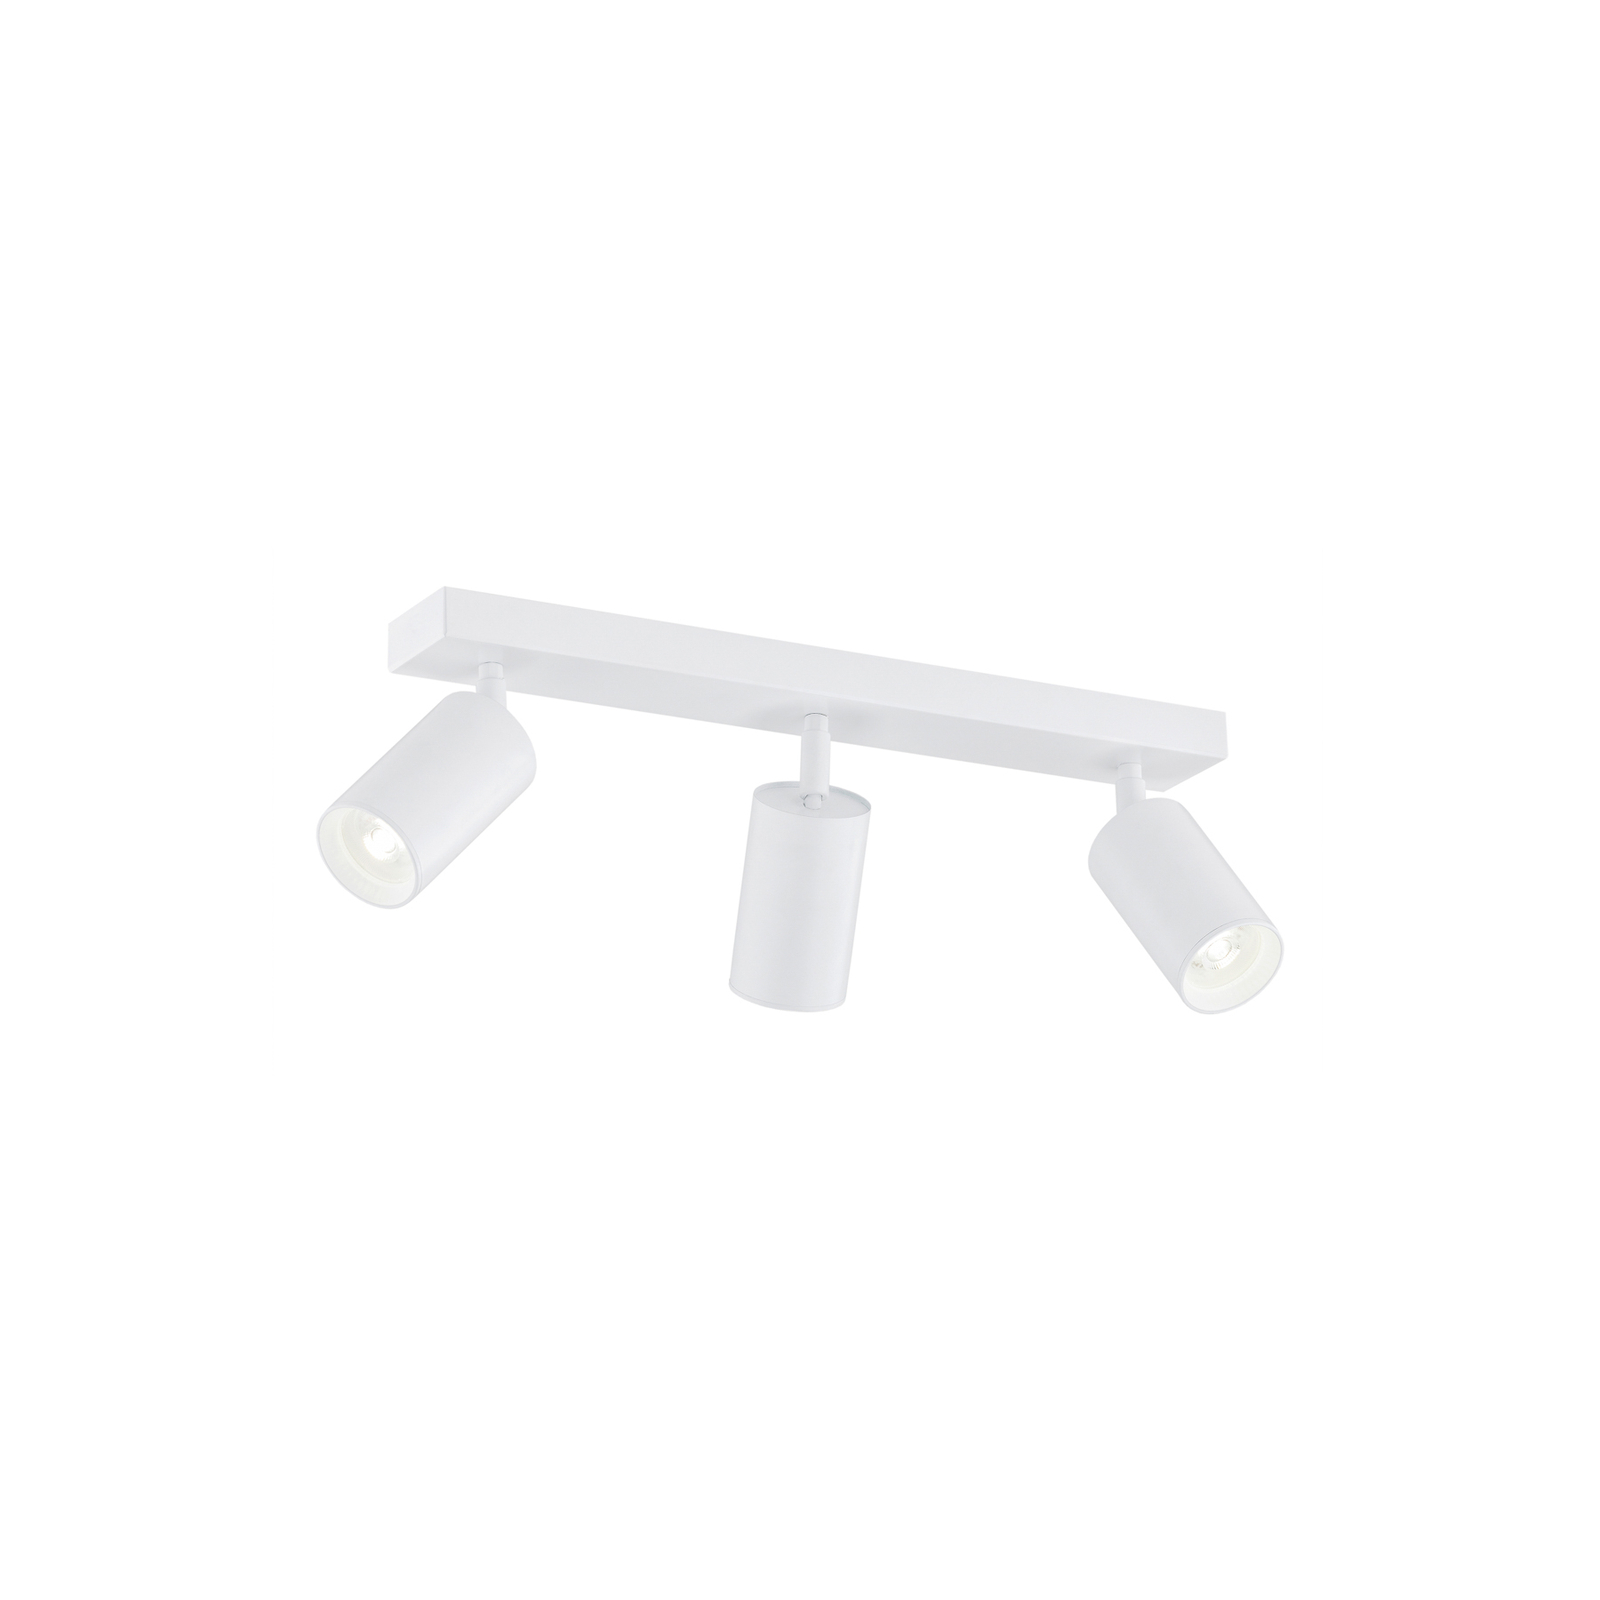 Sado downlight, white, steel, adjustable, 3-bulb long